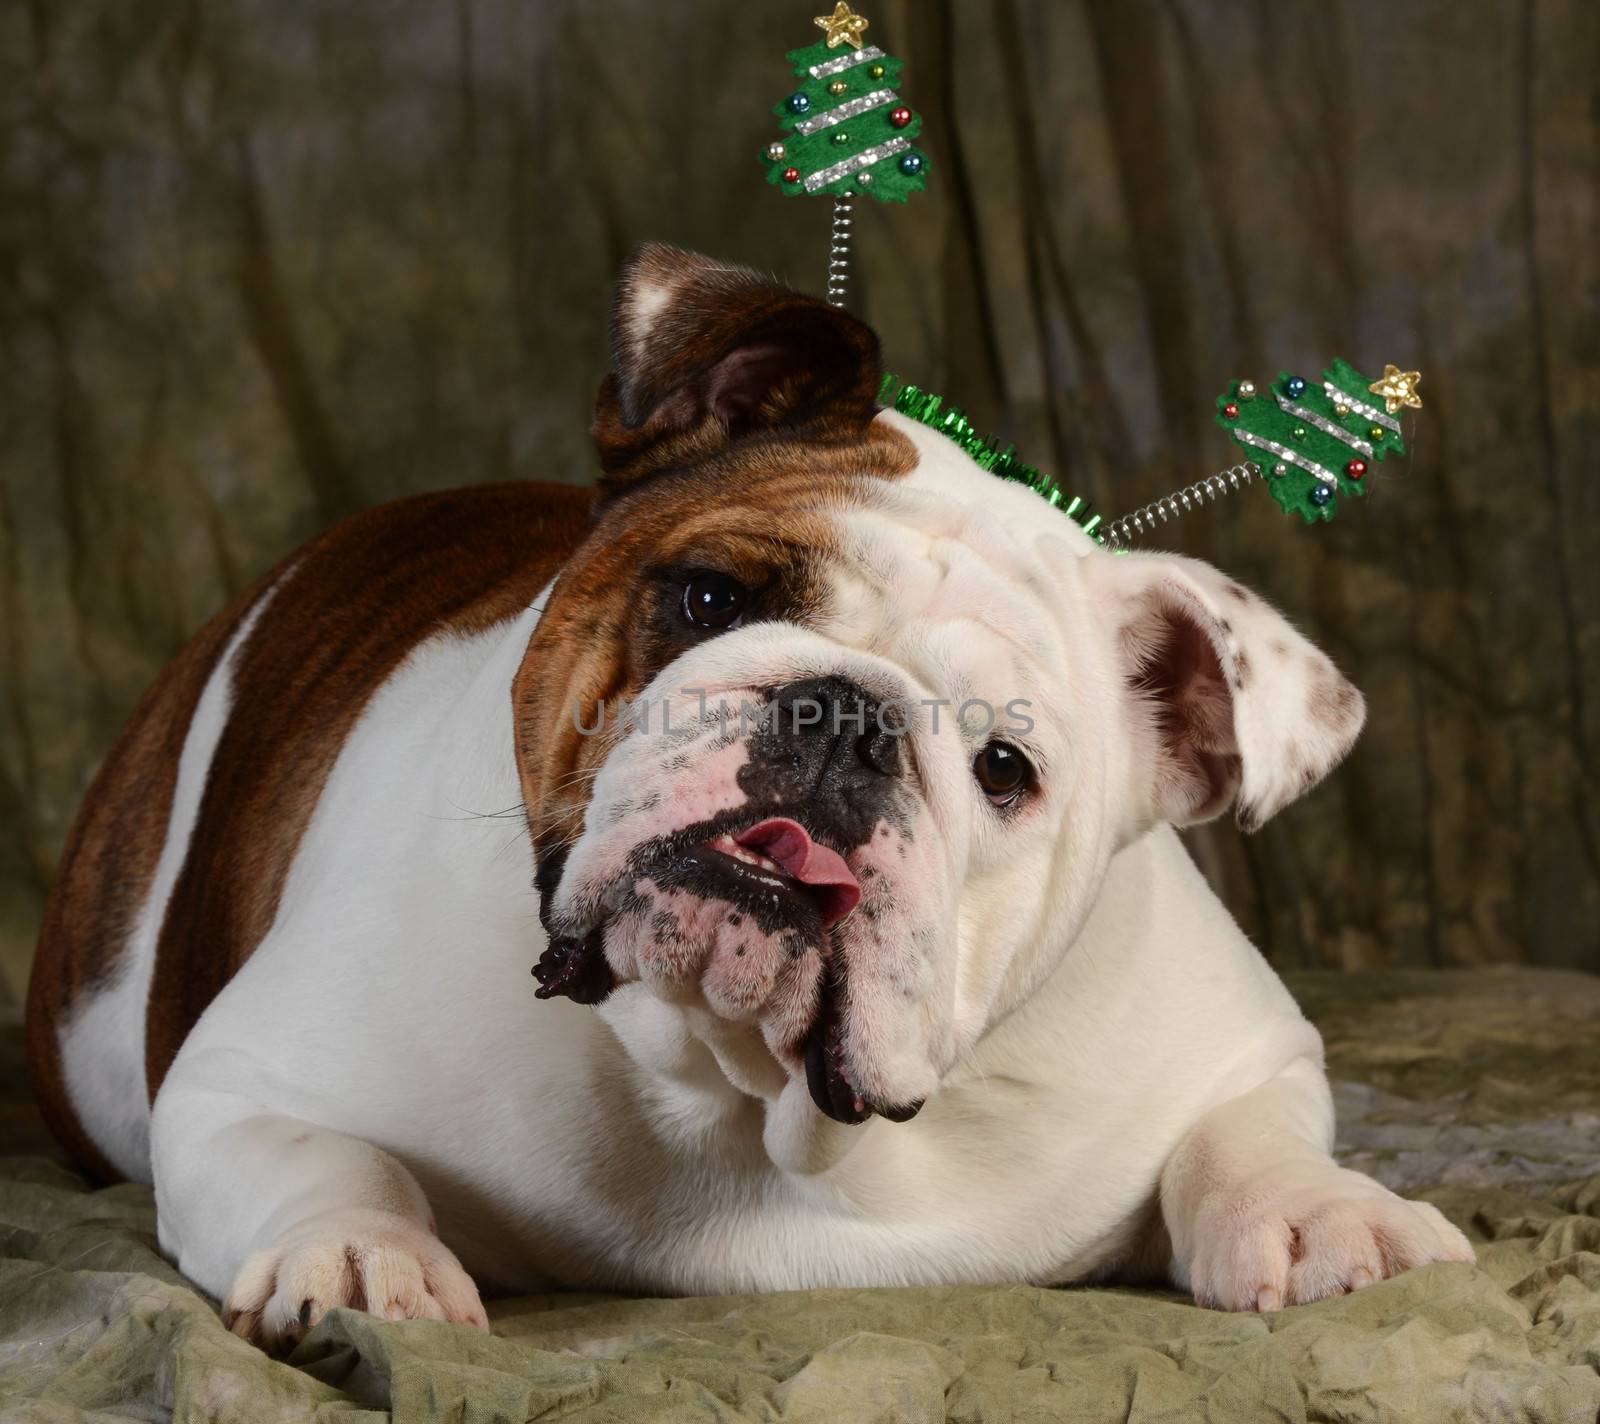 christmas dog - english bulldog with silly expression wearing christmas headband